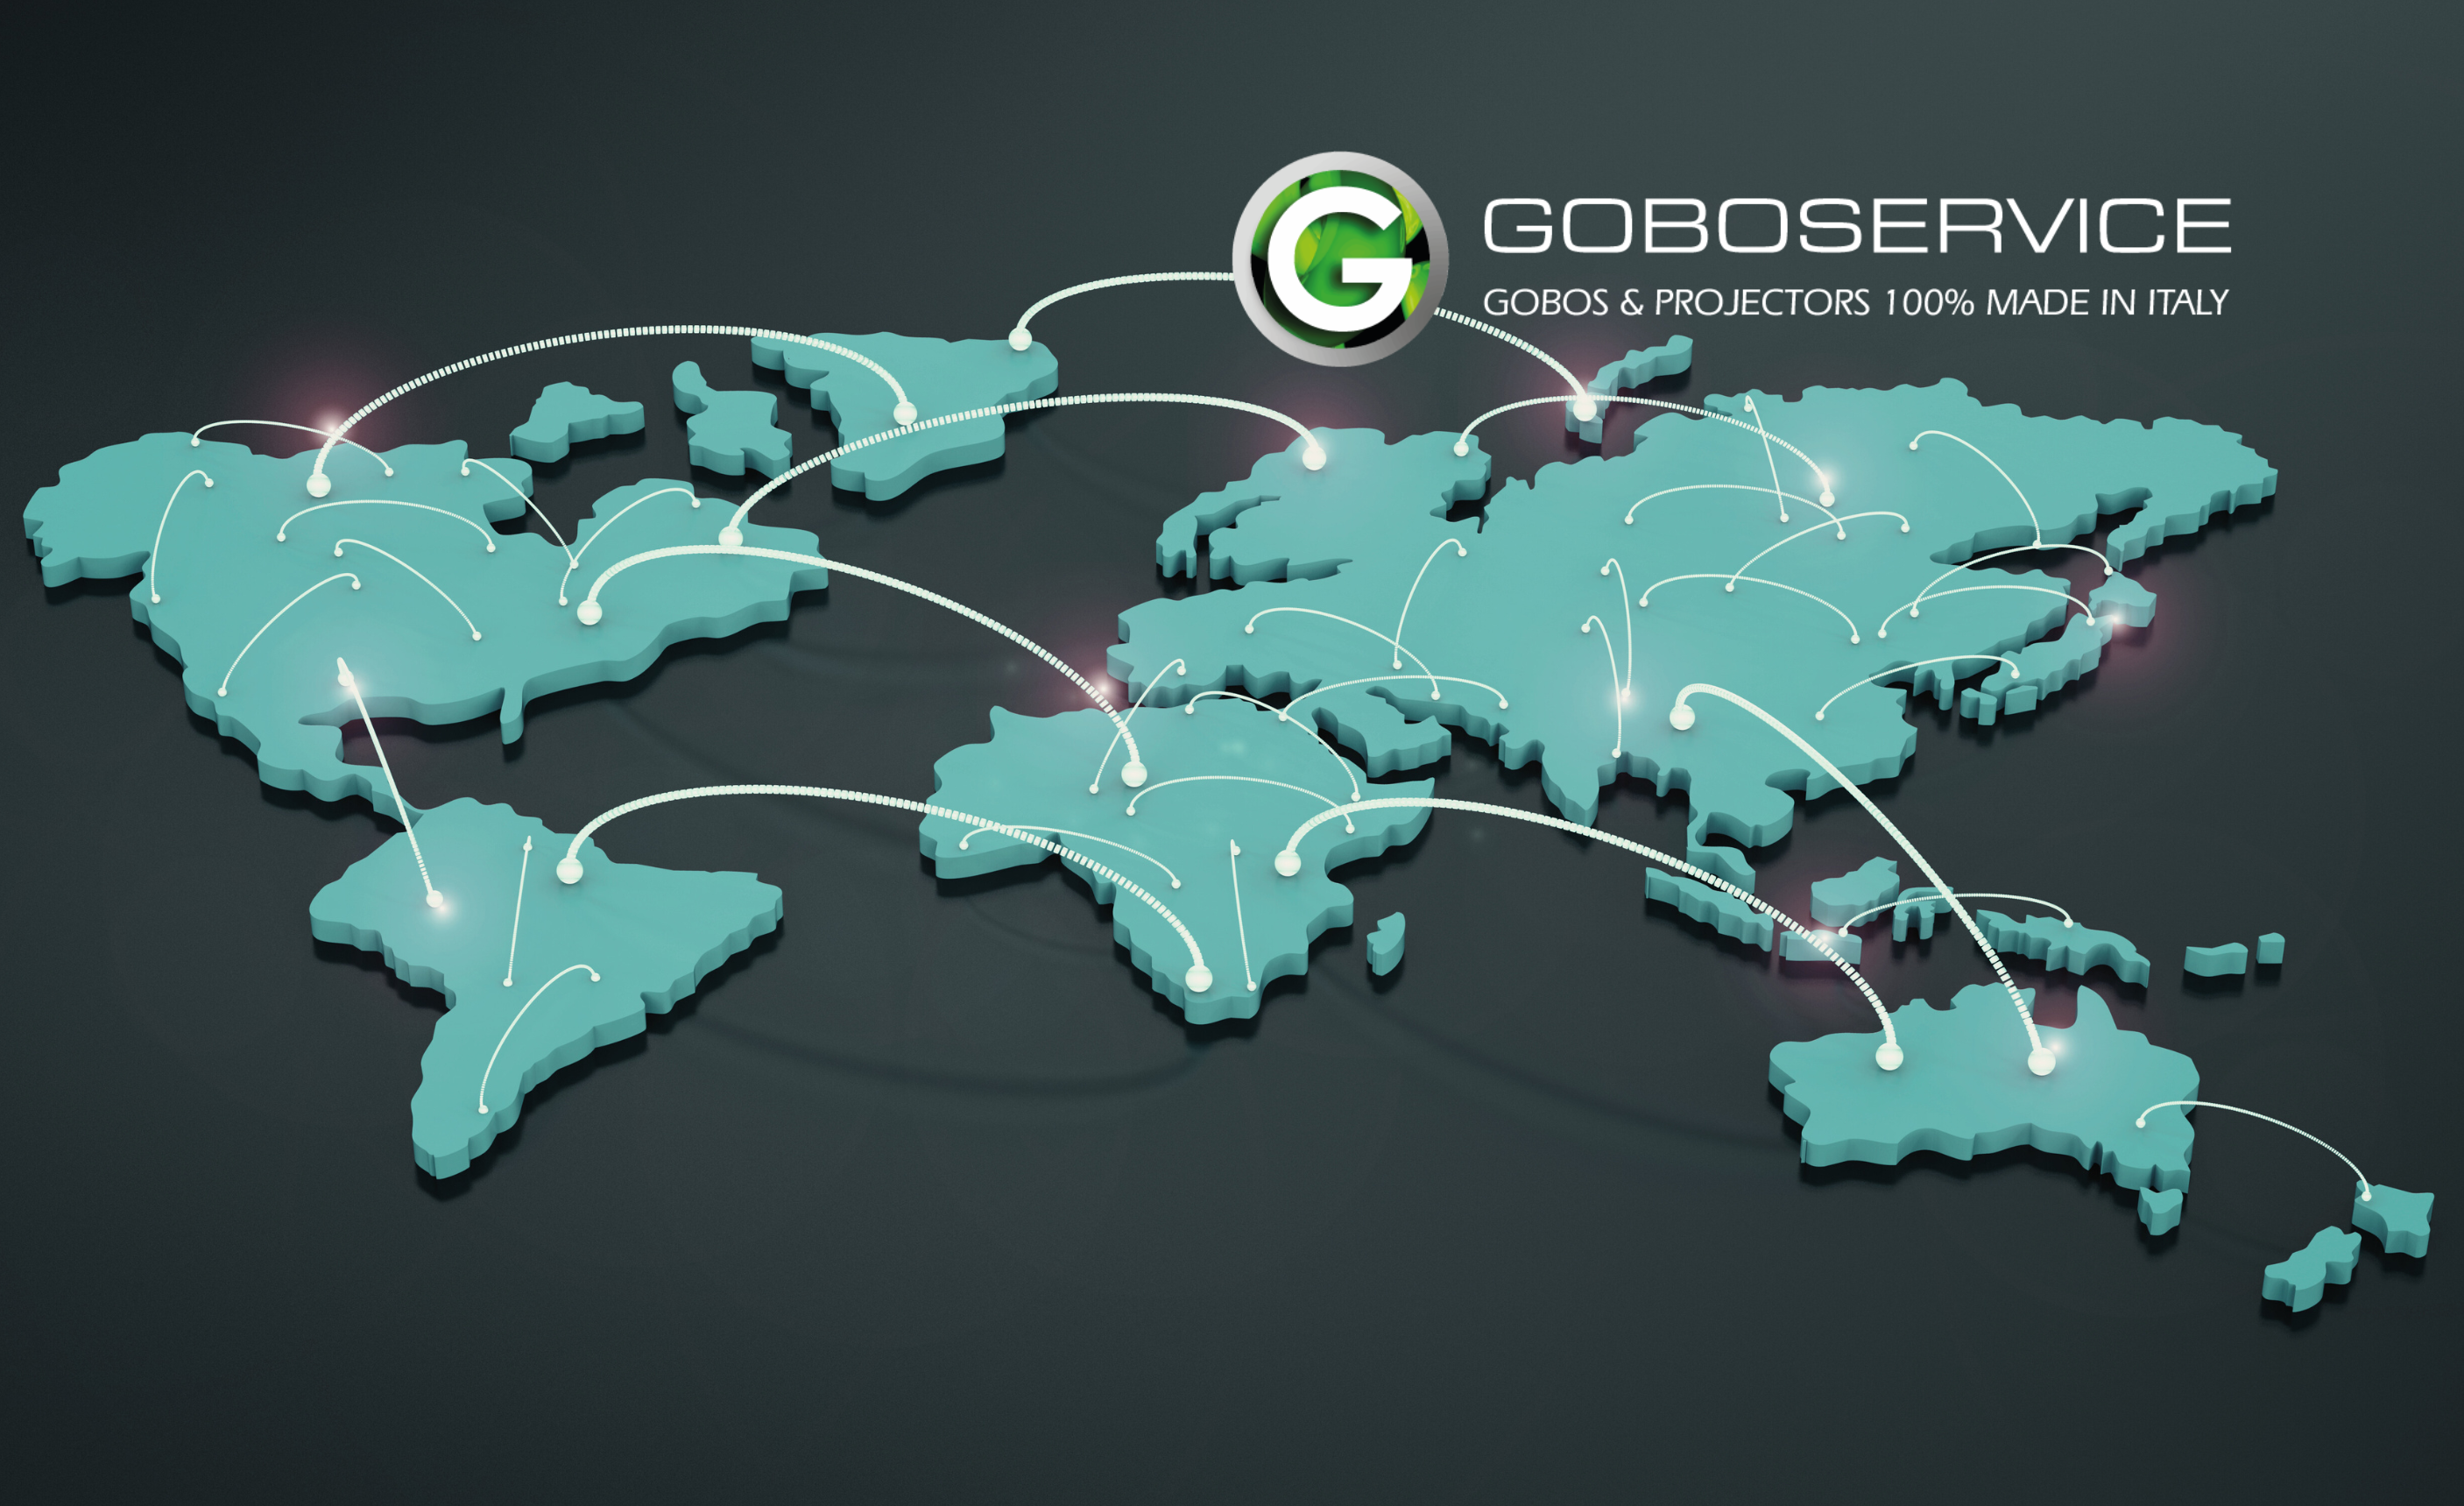 Goboservice's_global_reach